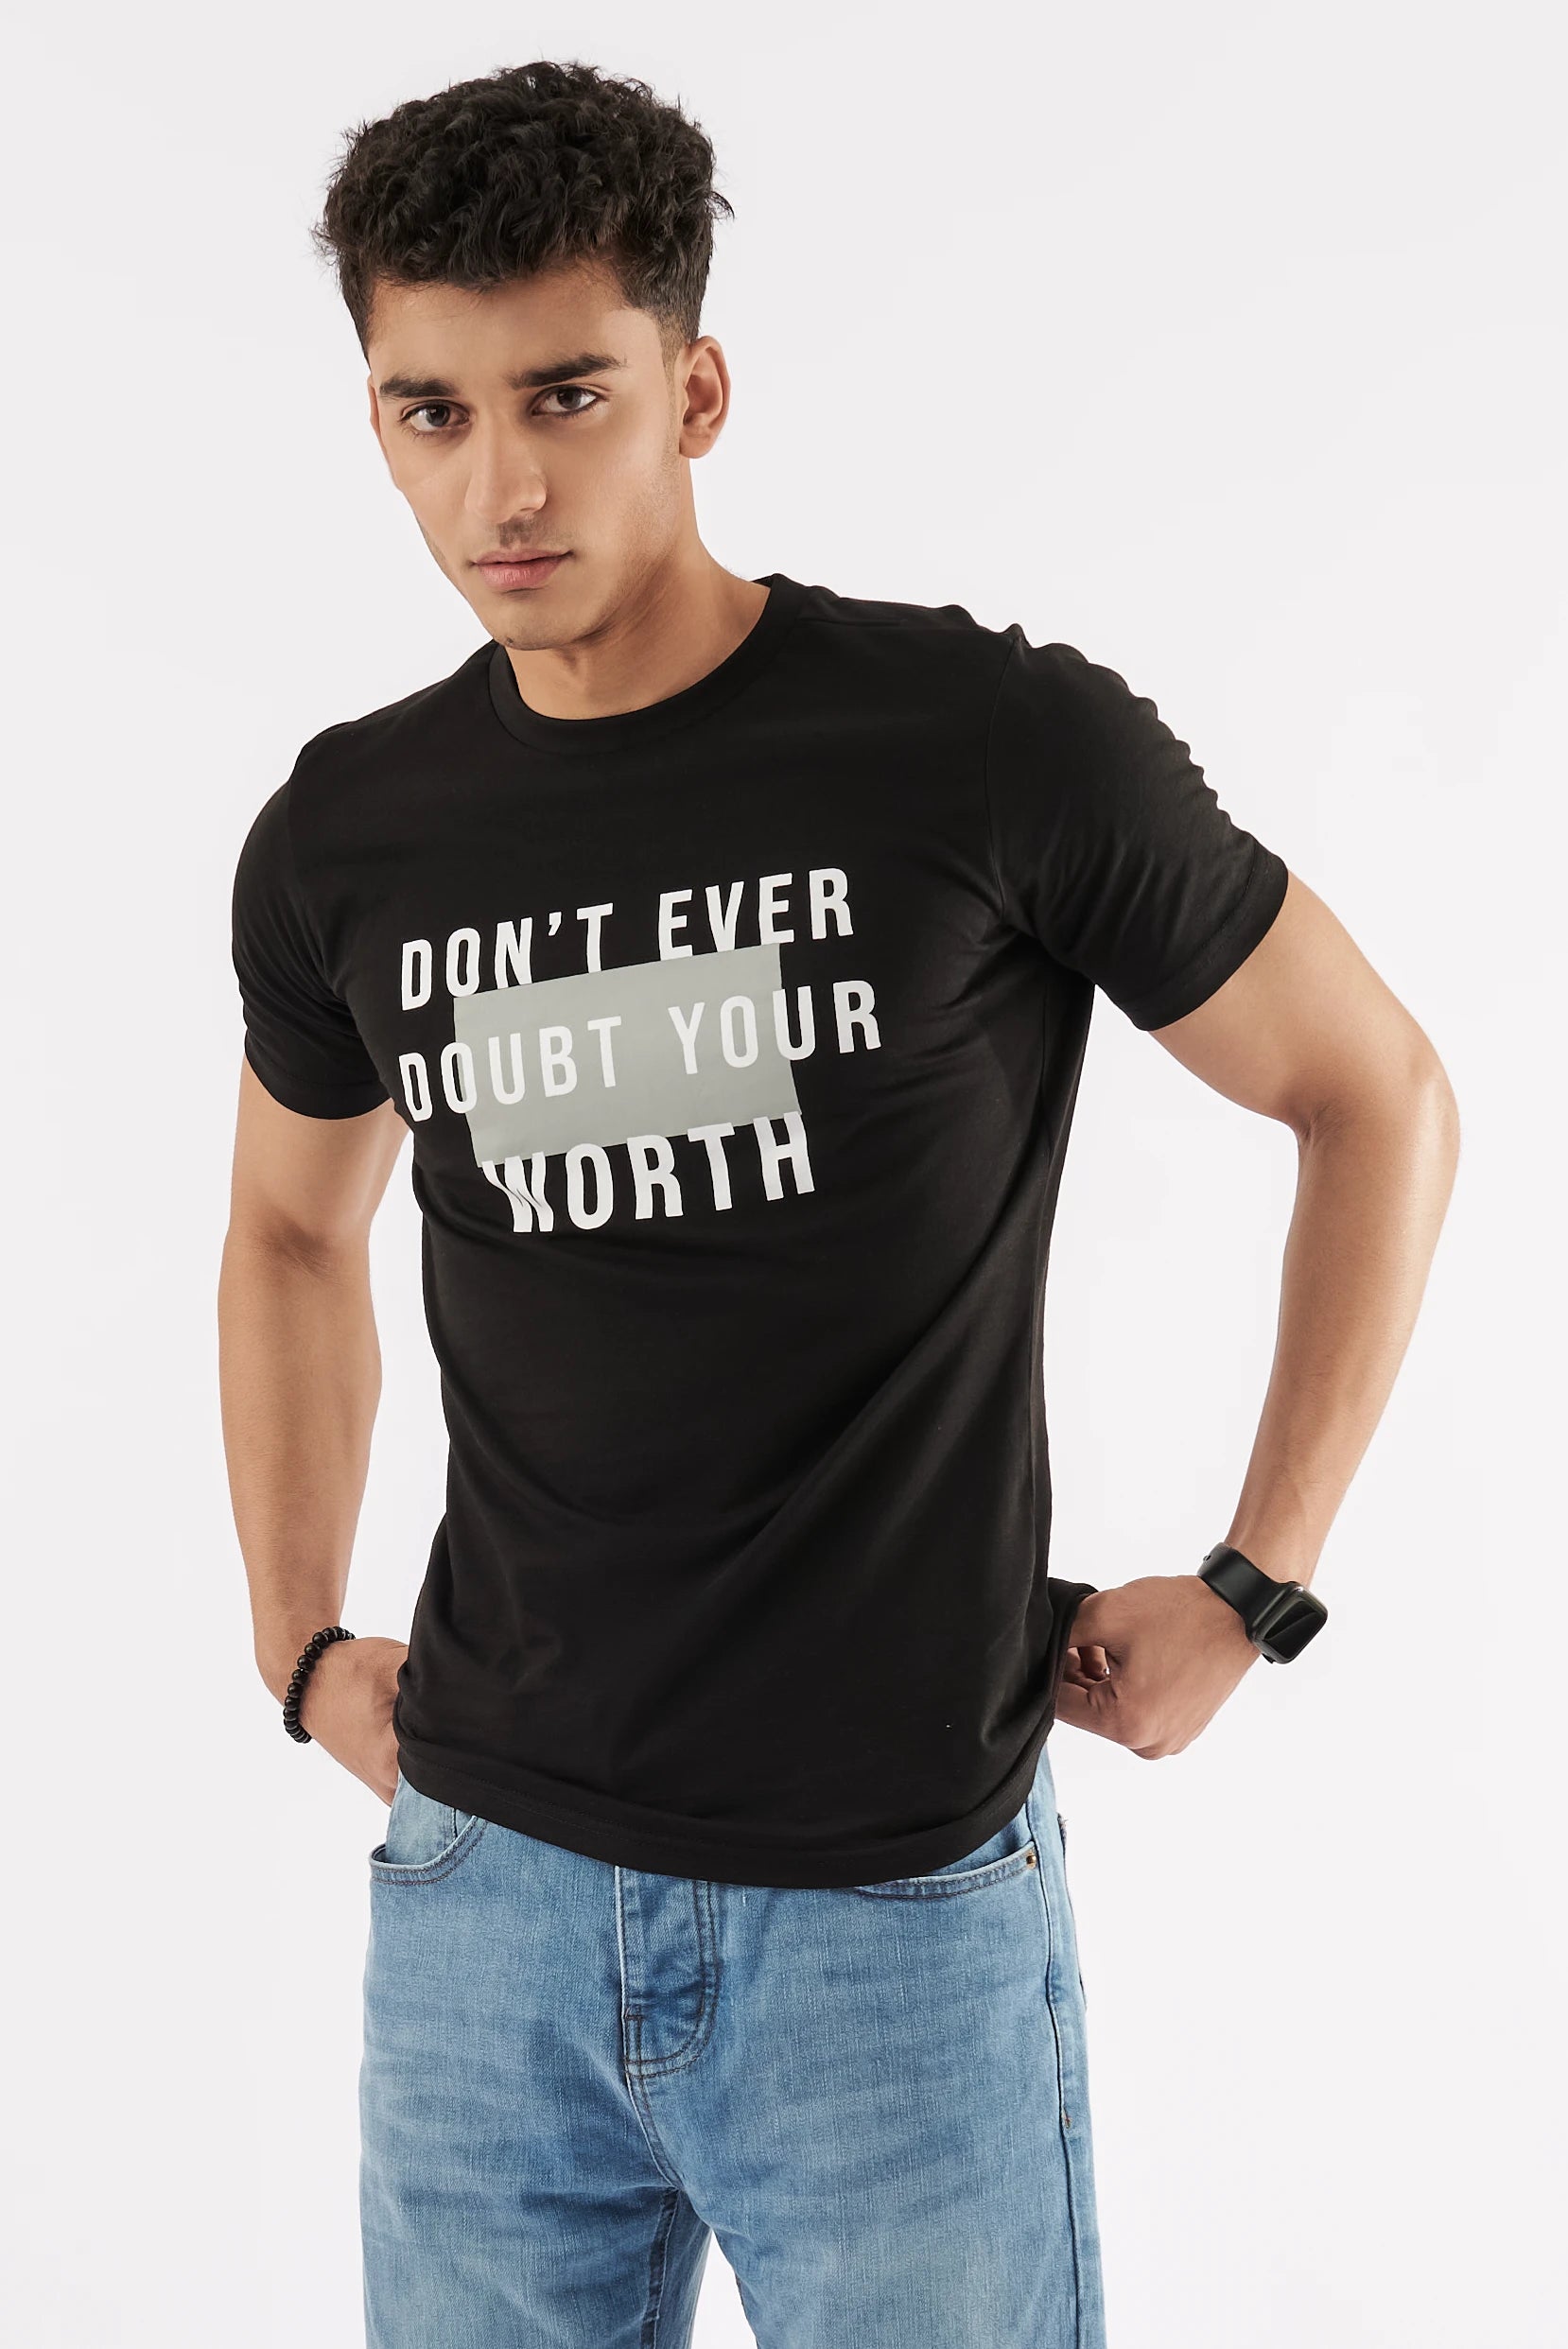 Men's Statement T-Shirt Black